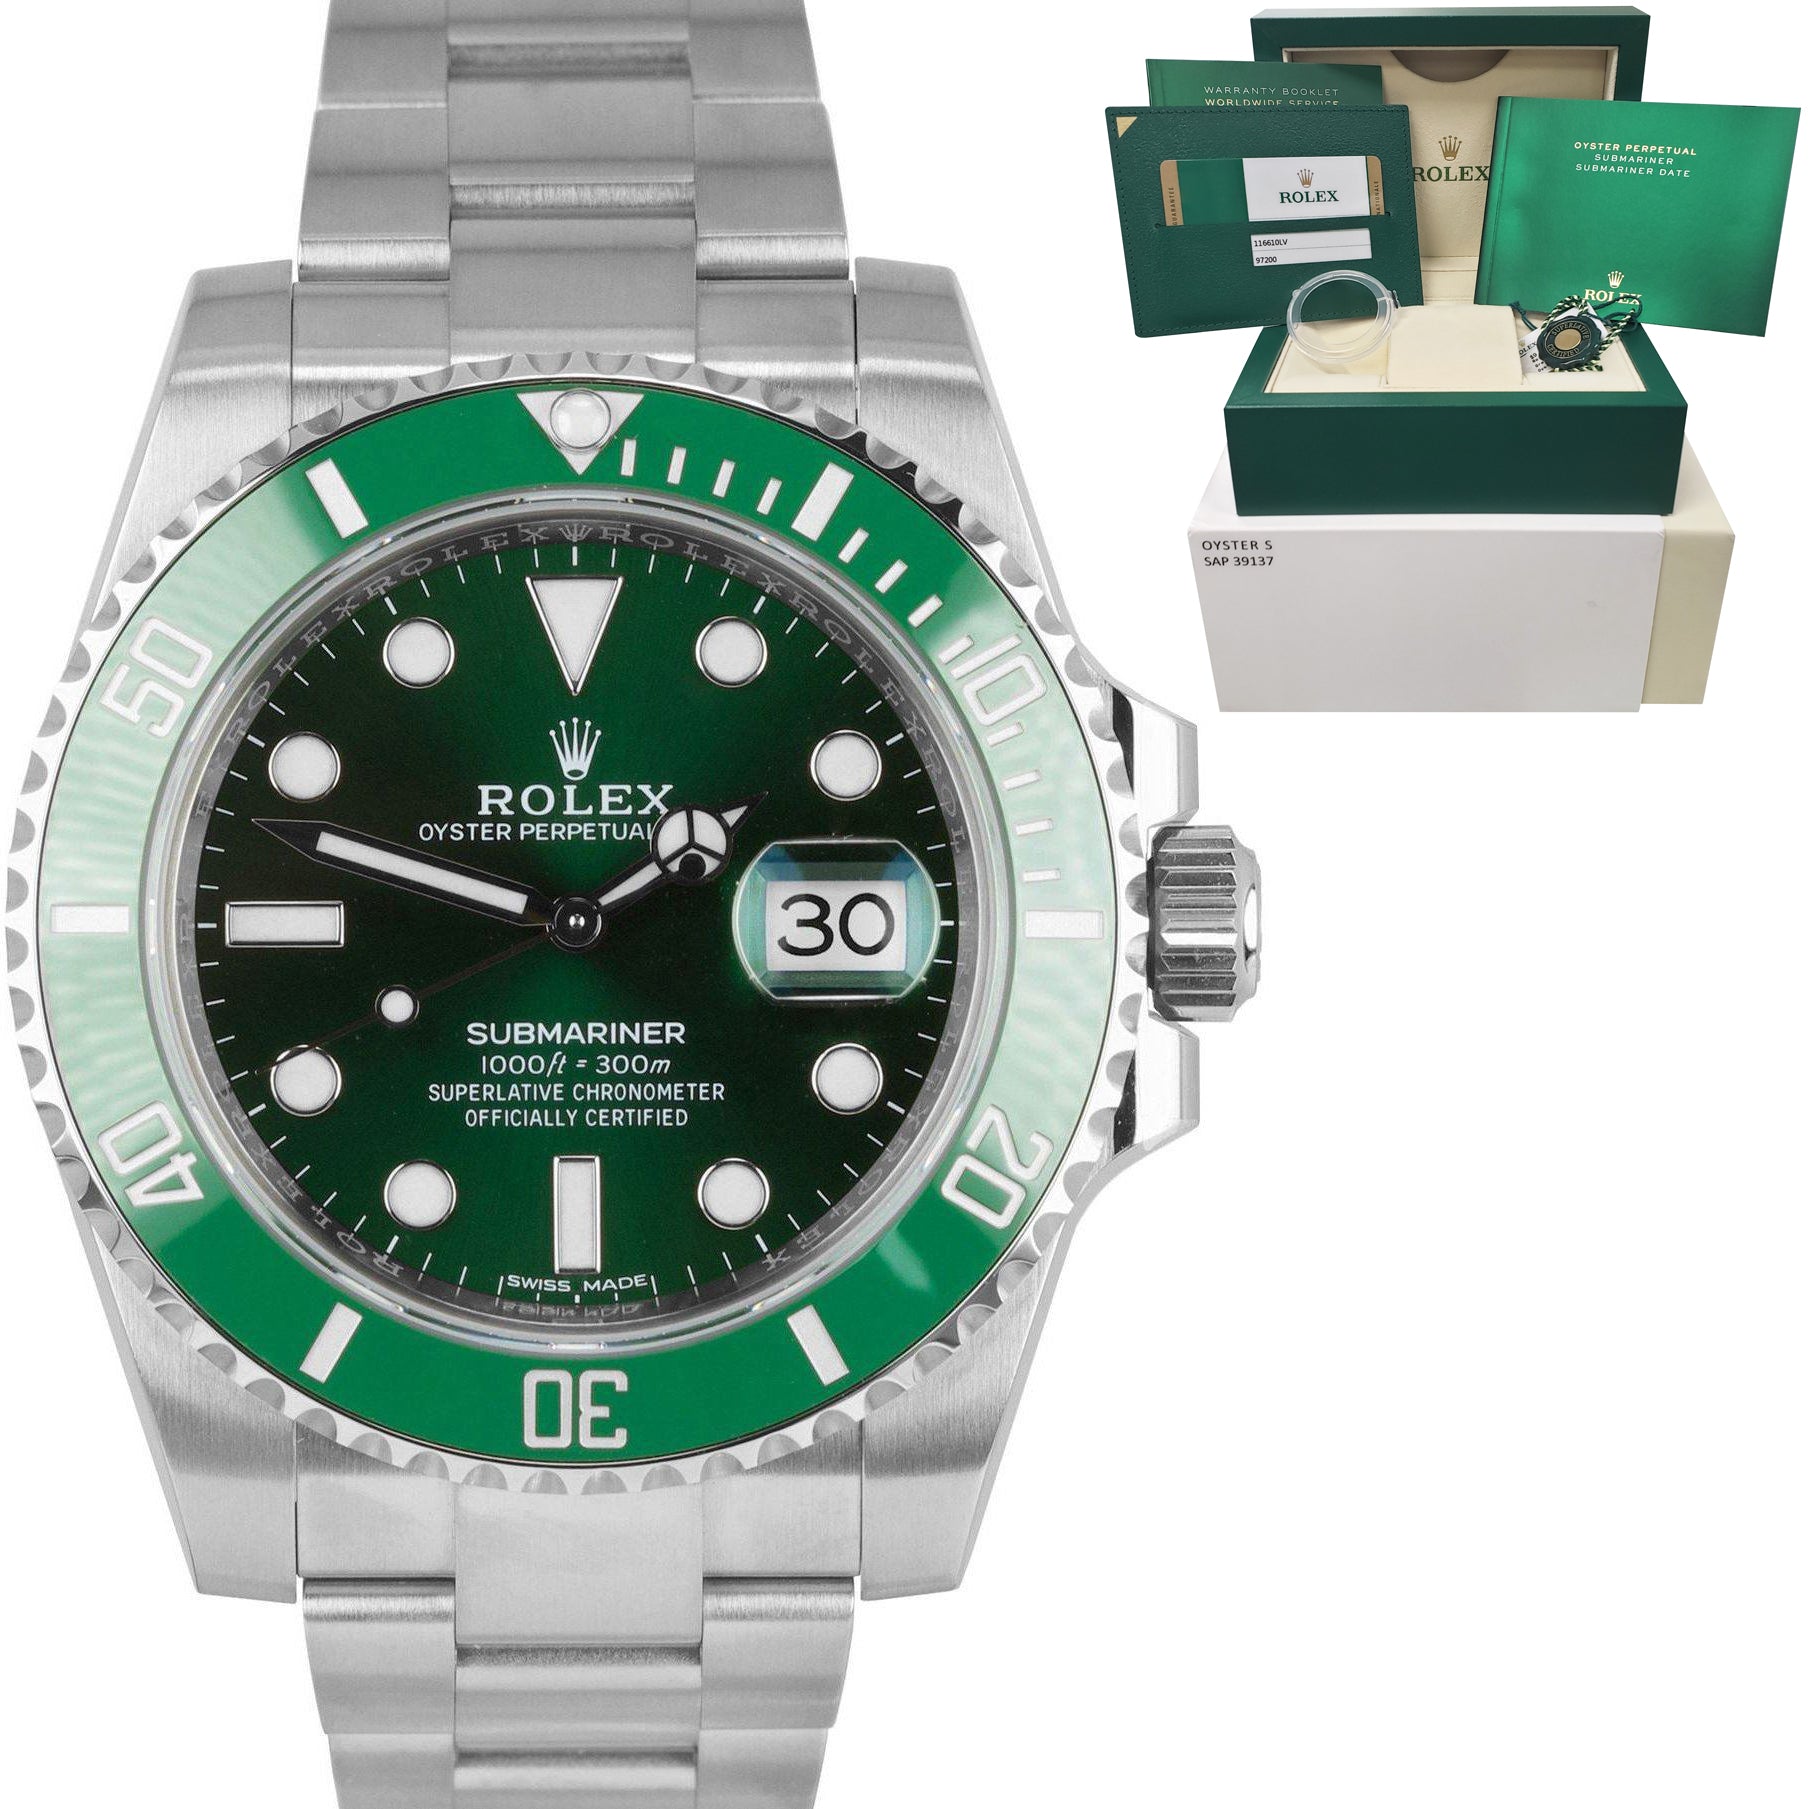 Rolex Steel Submariner Date Watch - The Hulk - Green Dial 116610